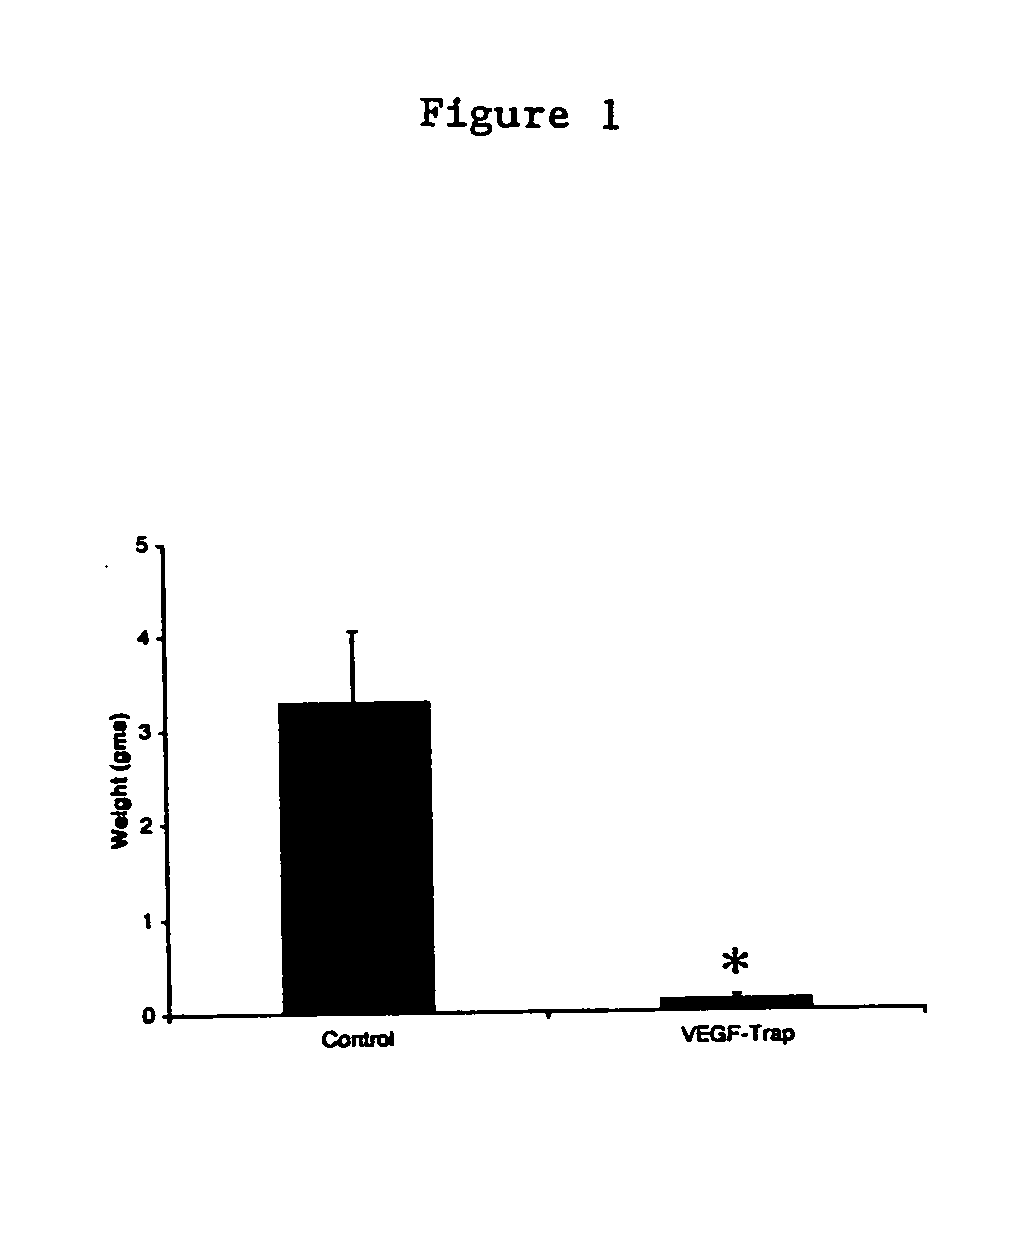 Method of tumor regression with VEGF inhibitors